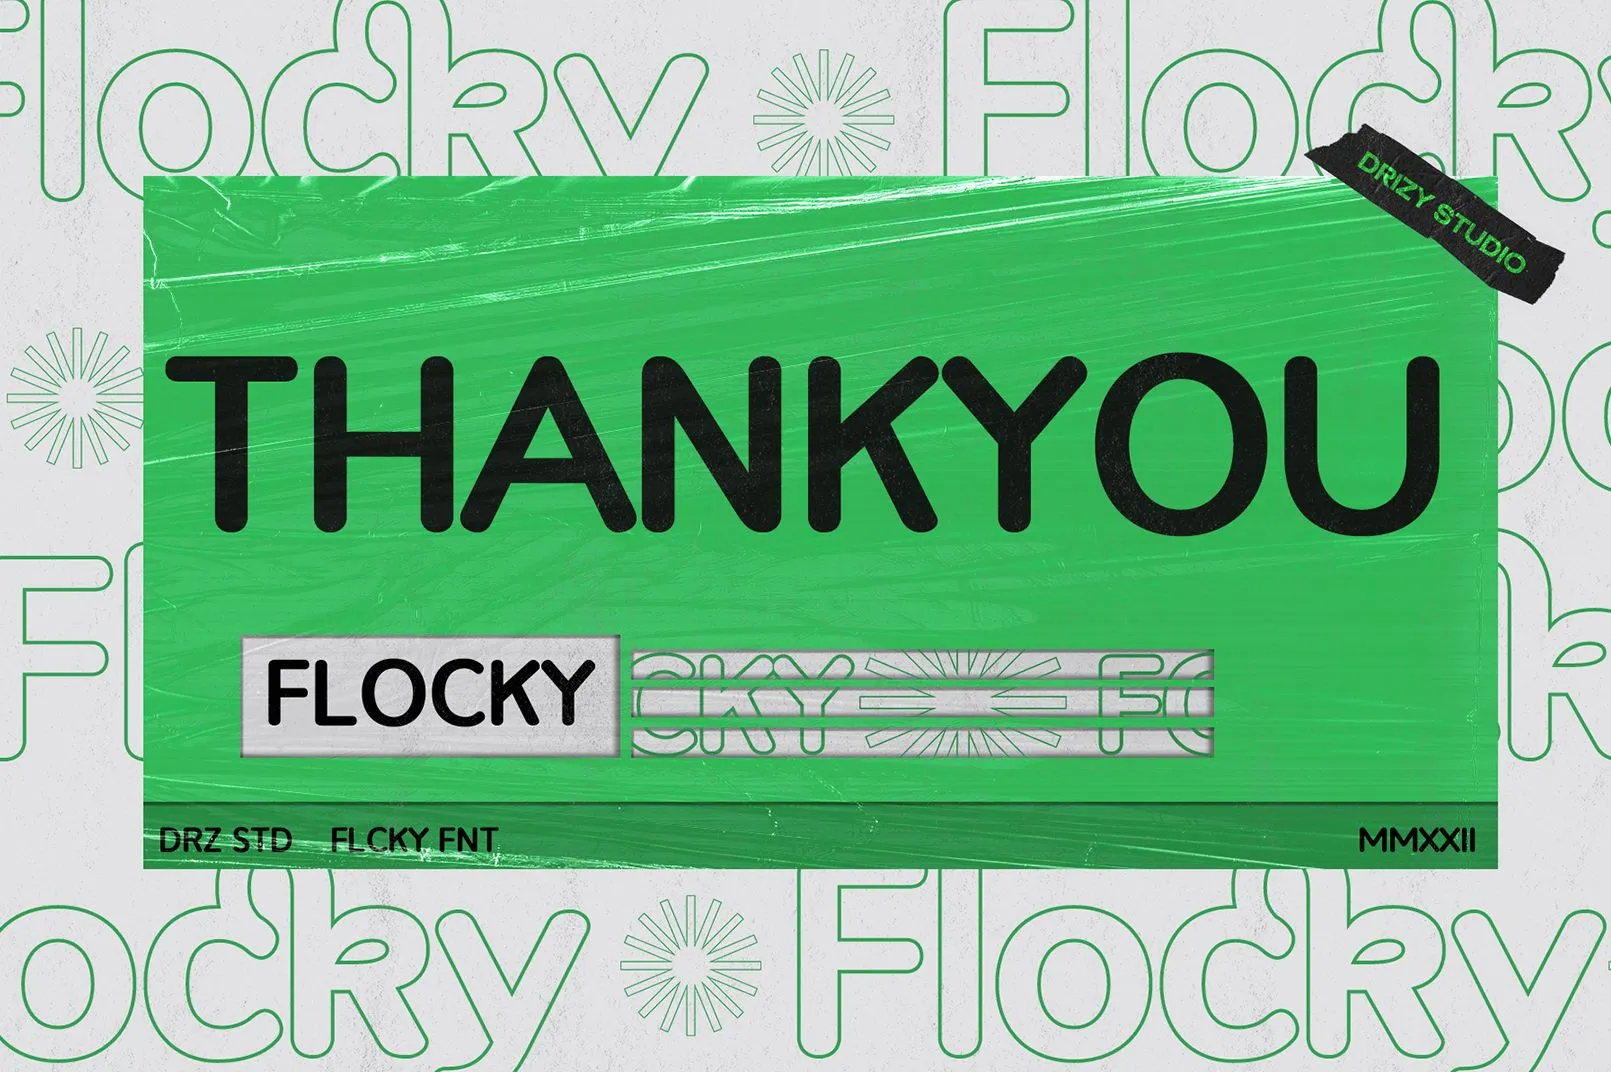 Flocky